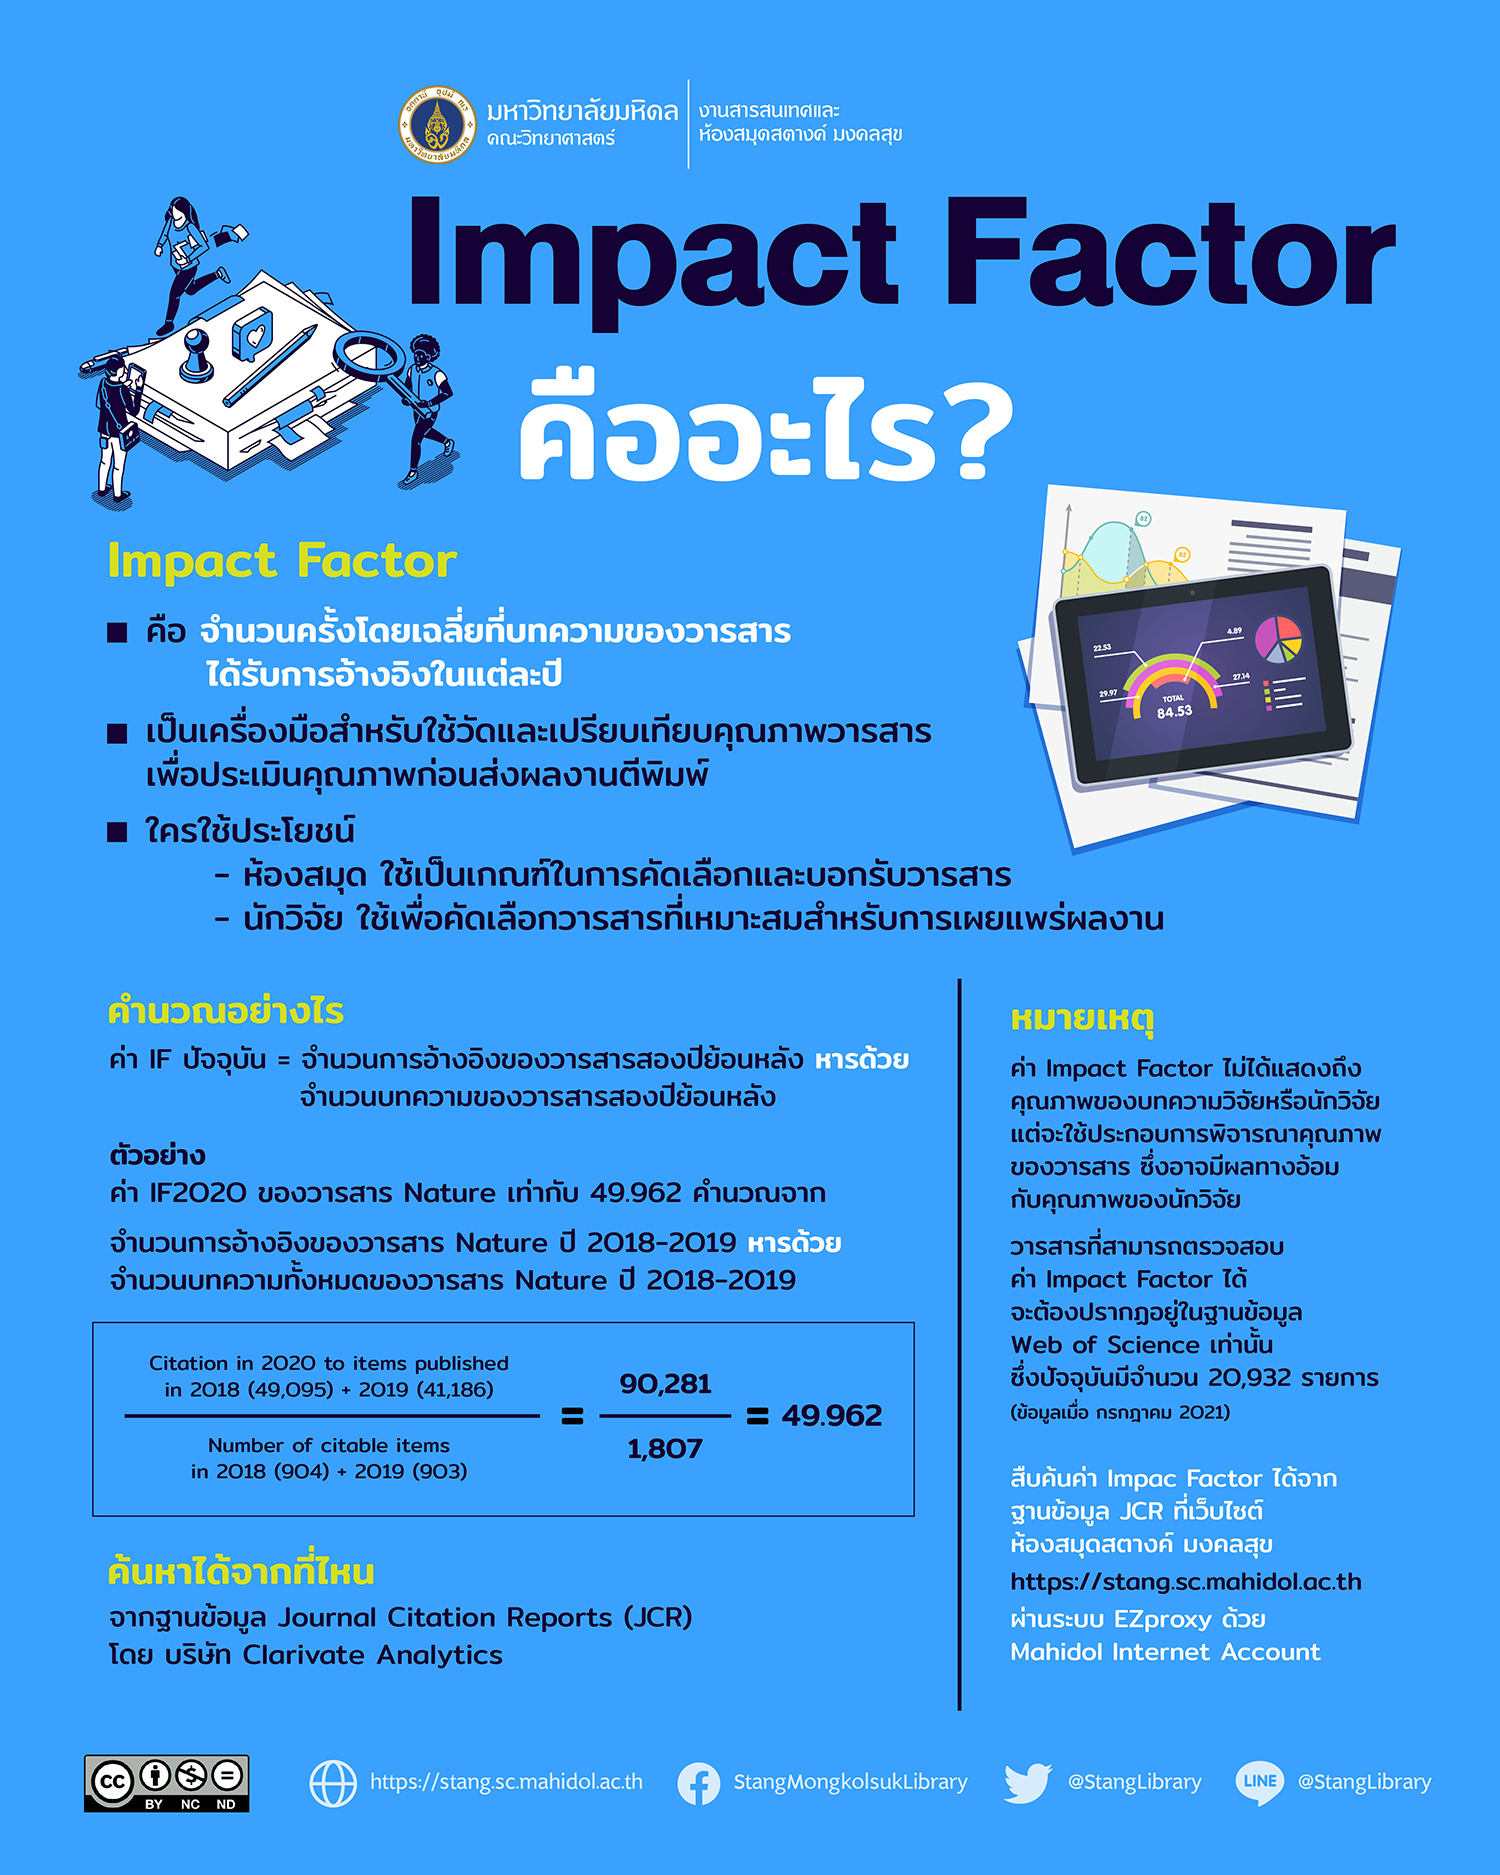 Impact Factor คืออะไร?